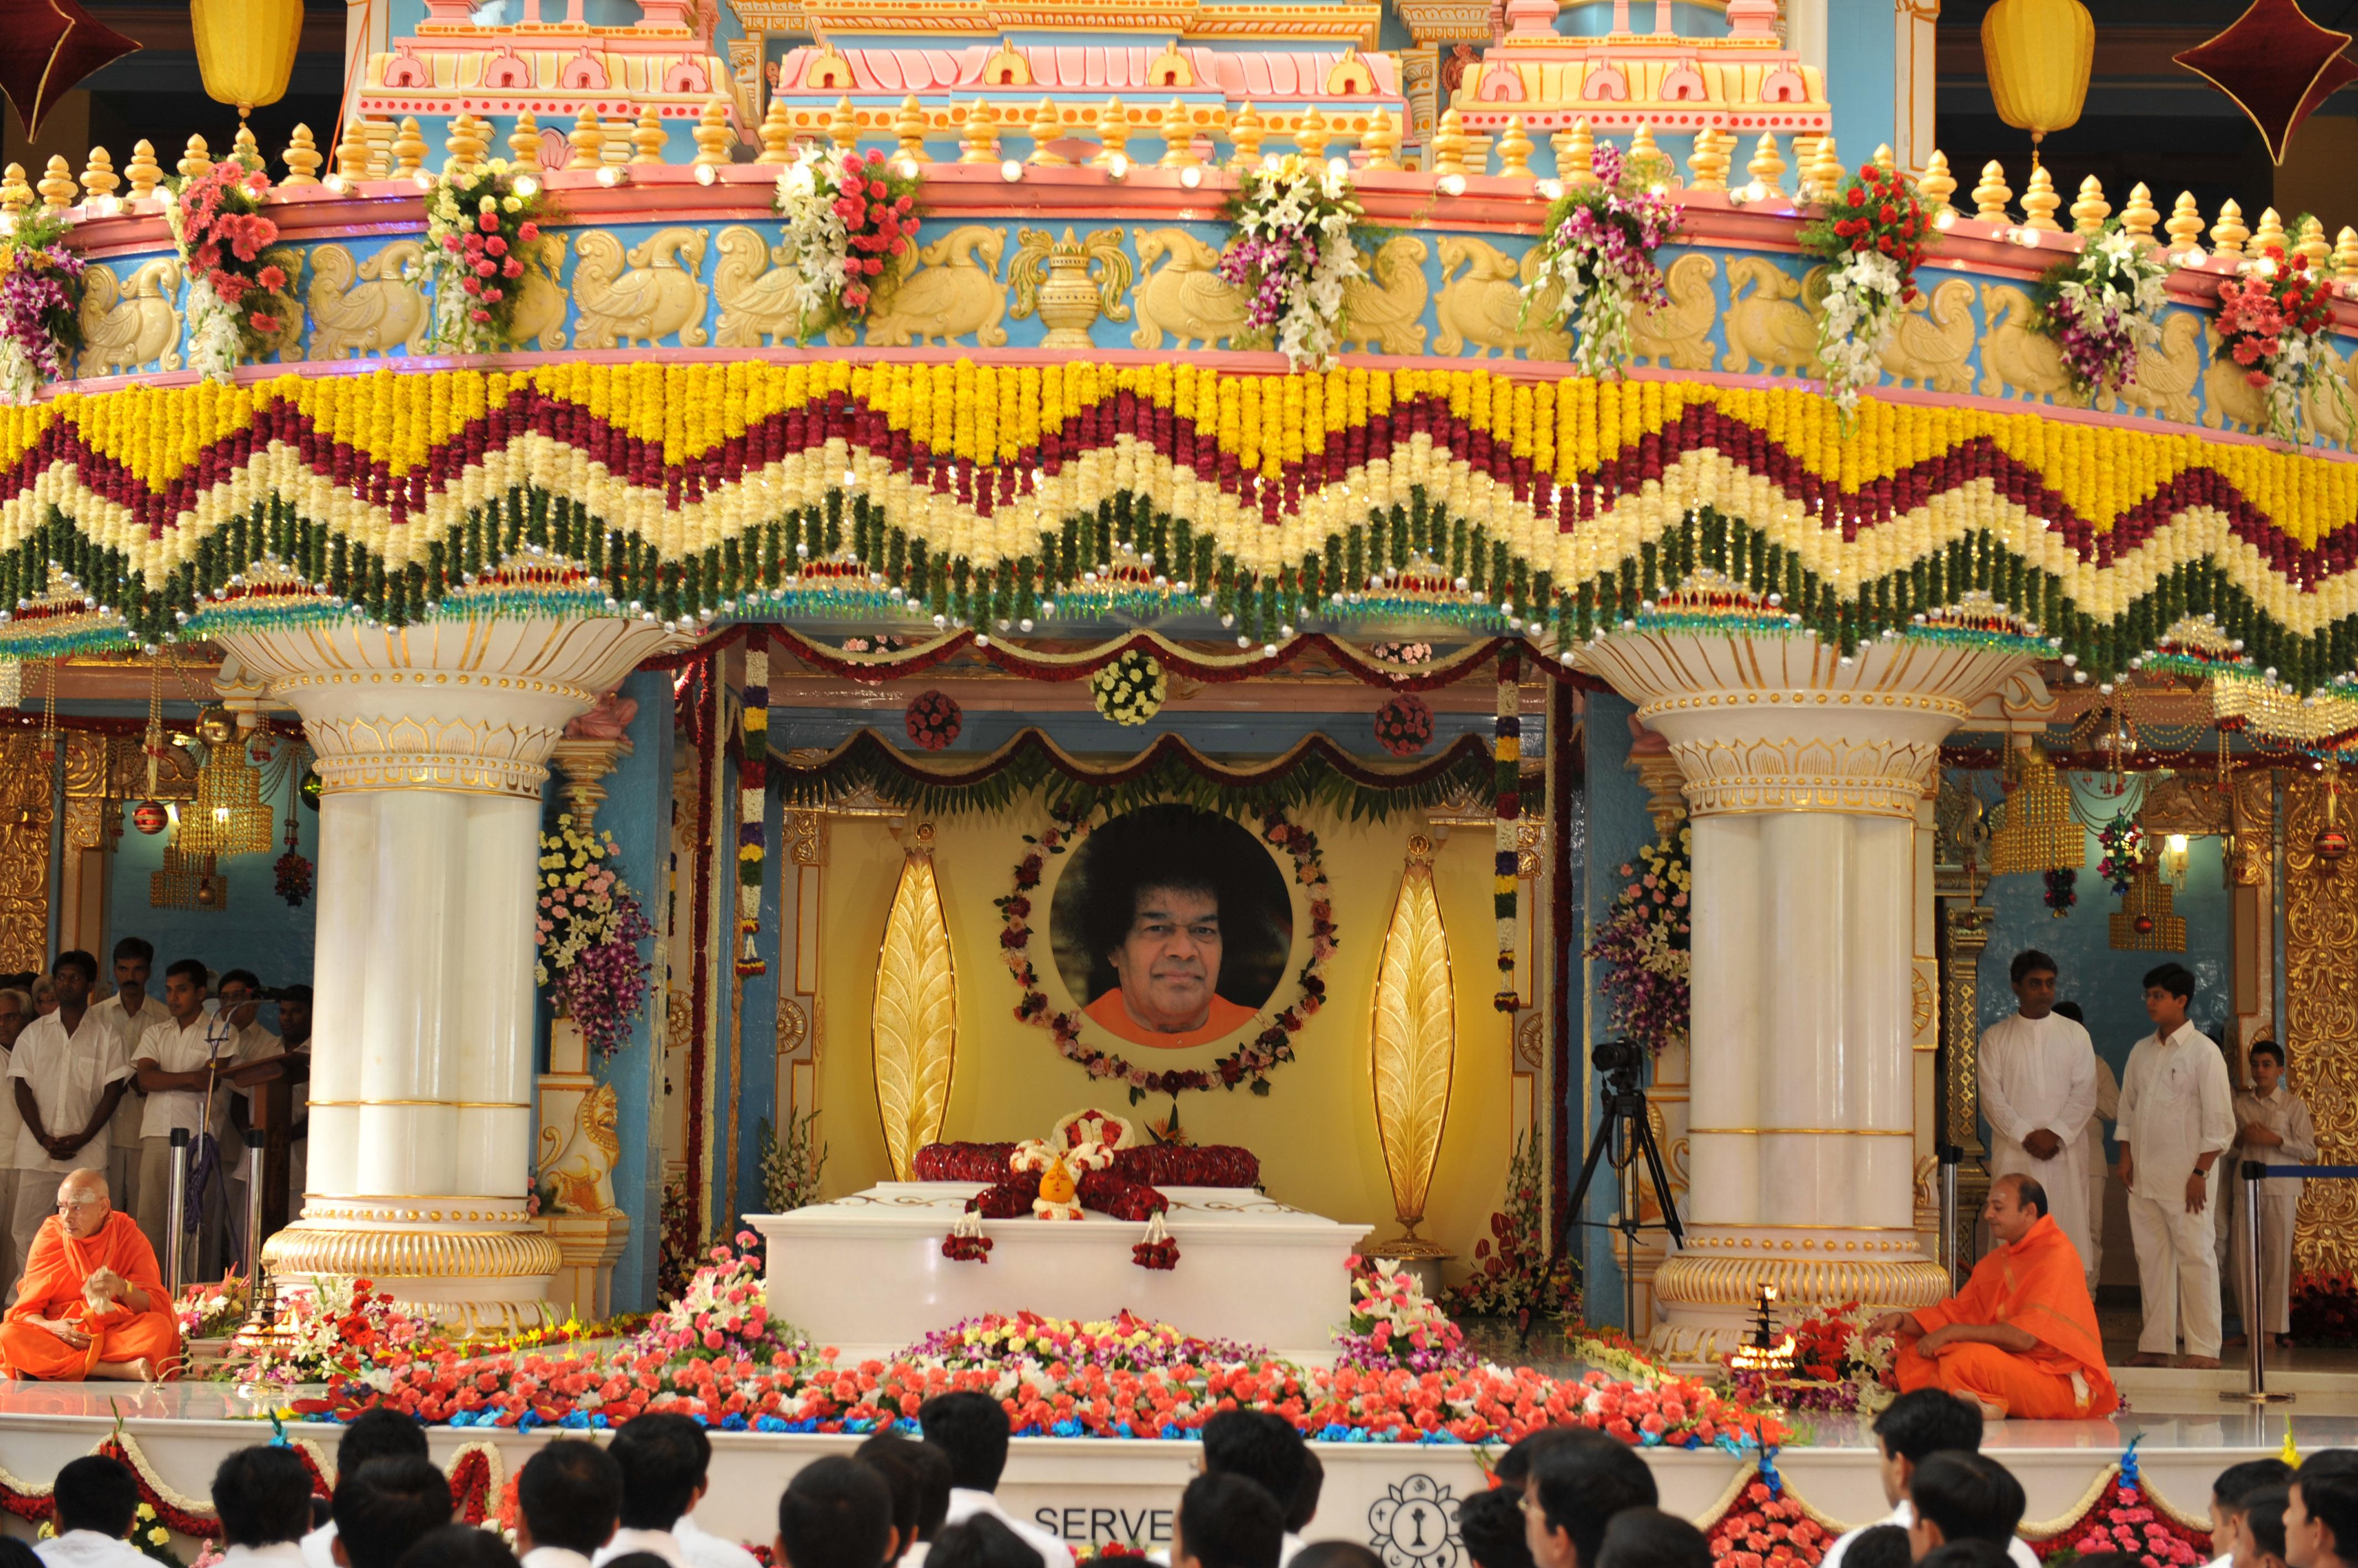 Pics of the Mahasamadhi